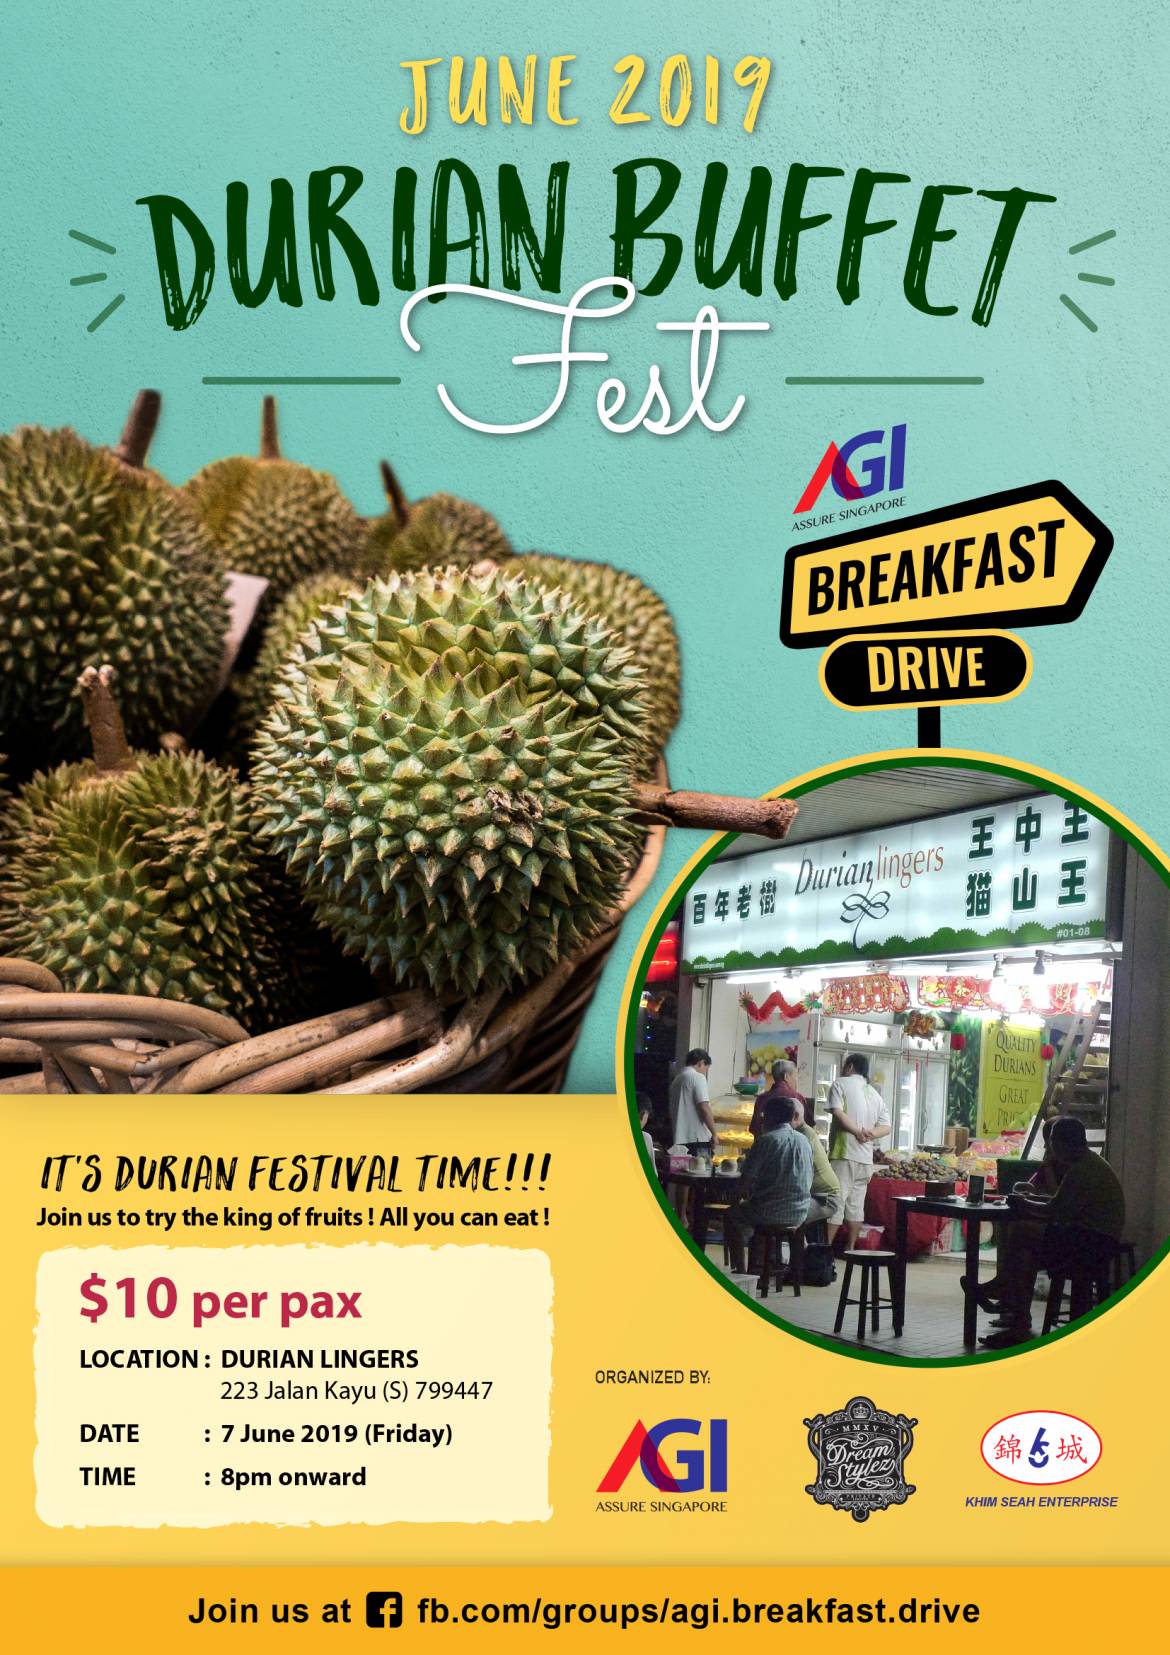 AGI-BF-Drive-2019-June-Durian-Buffet-Fest.jpg